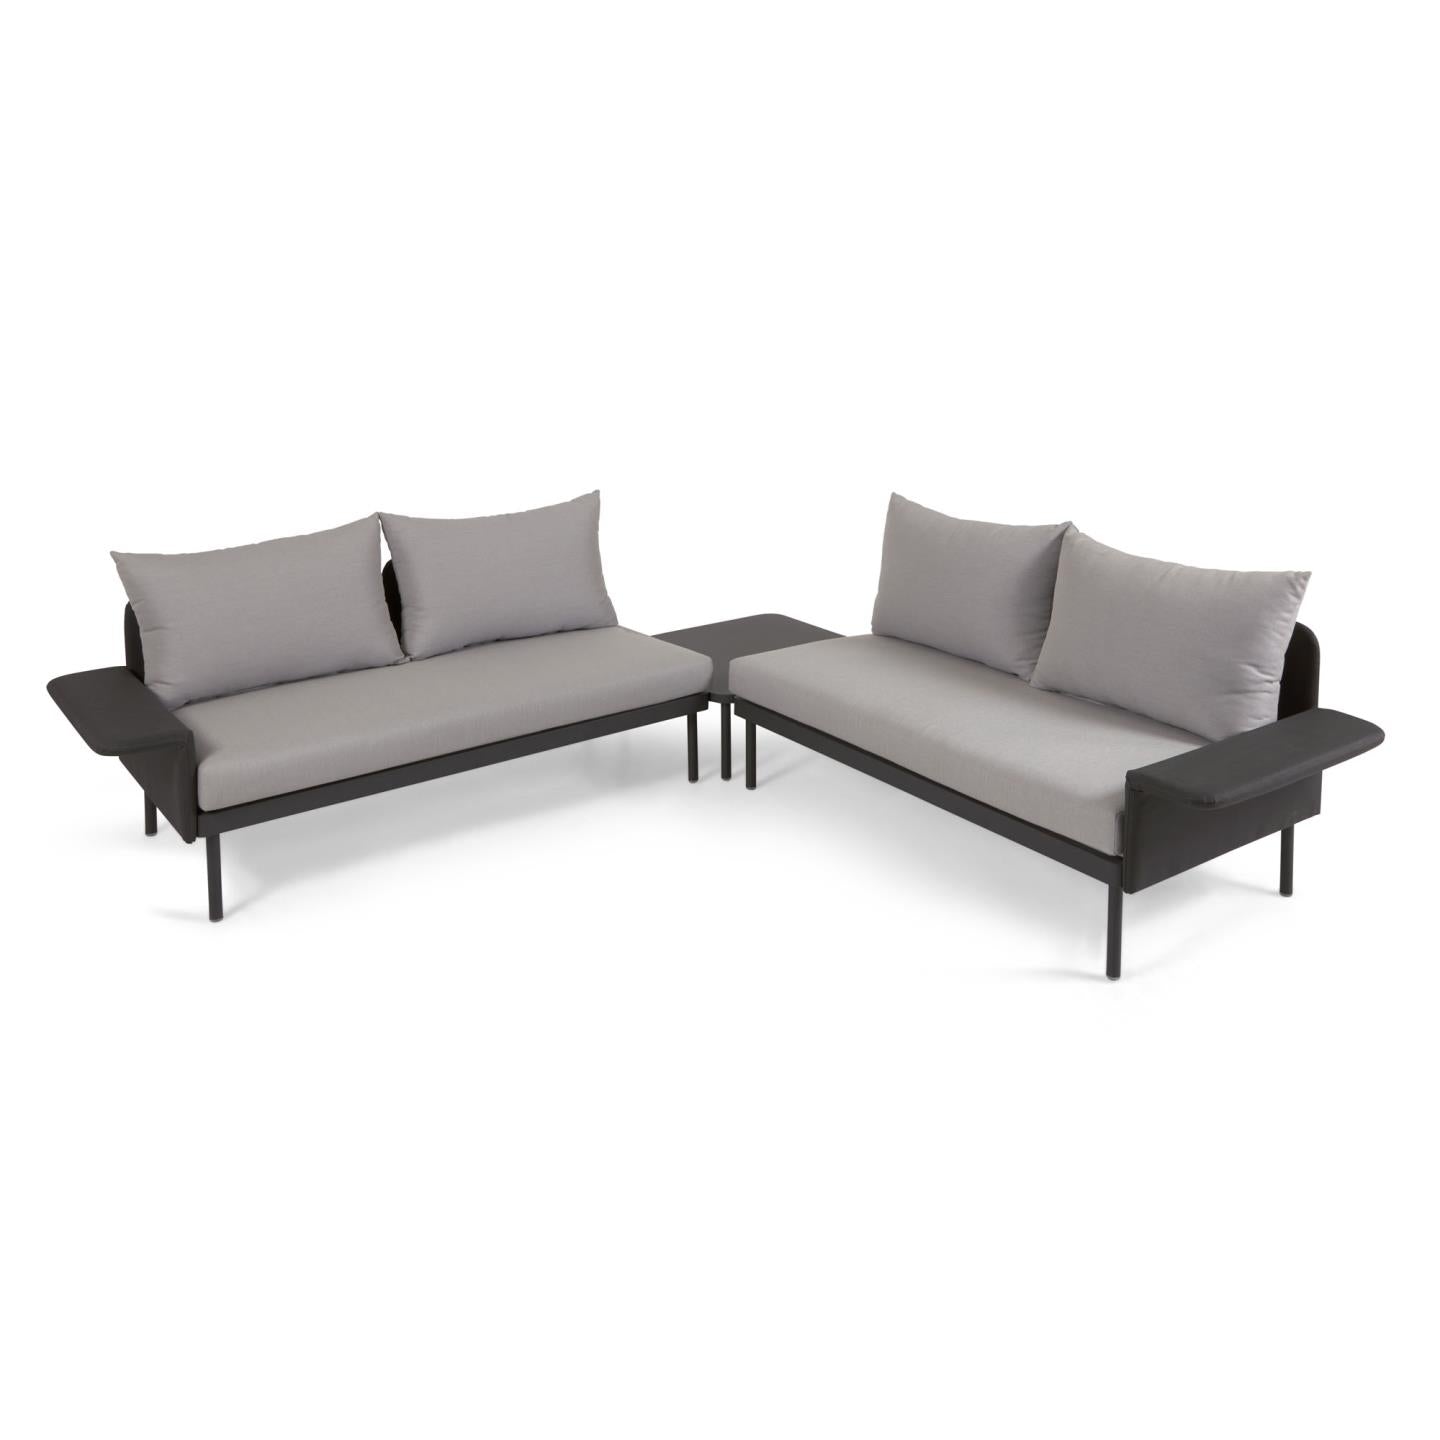 Zaltana outdoor corner sofa and table set in matte black aluminium, 164 cm